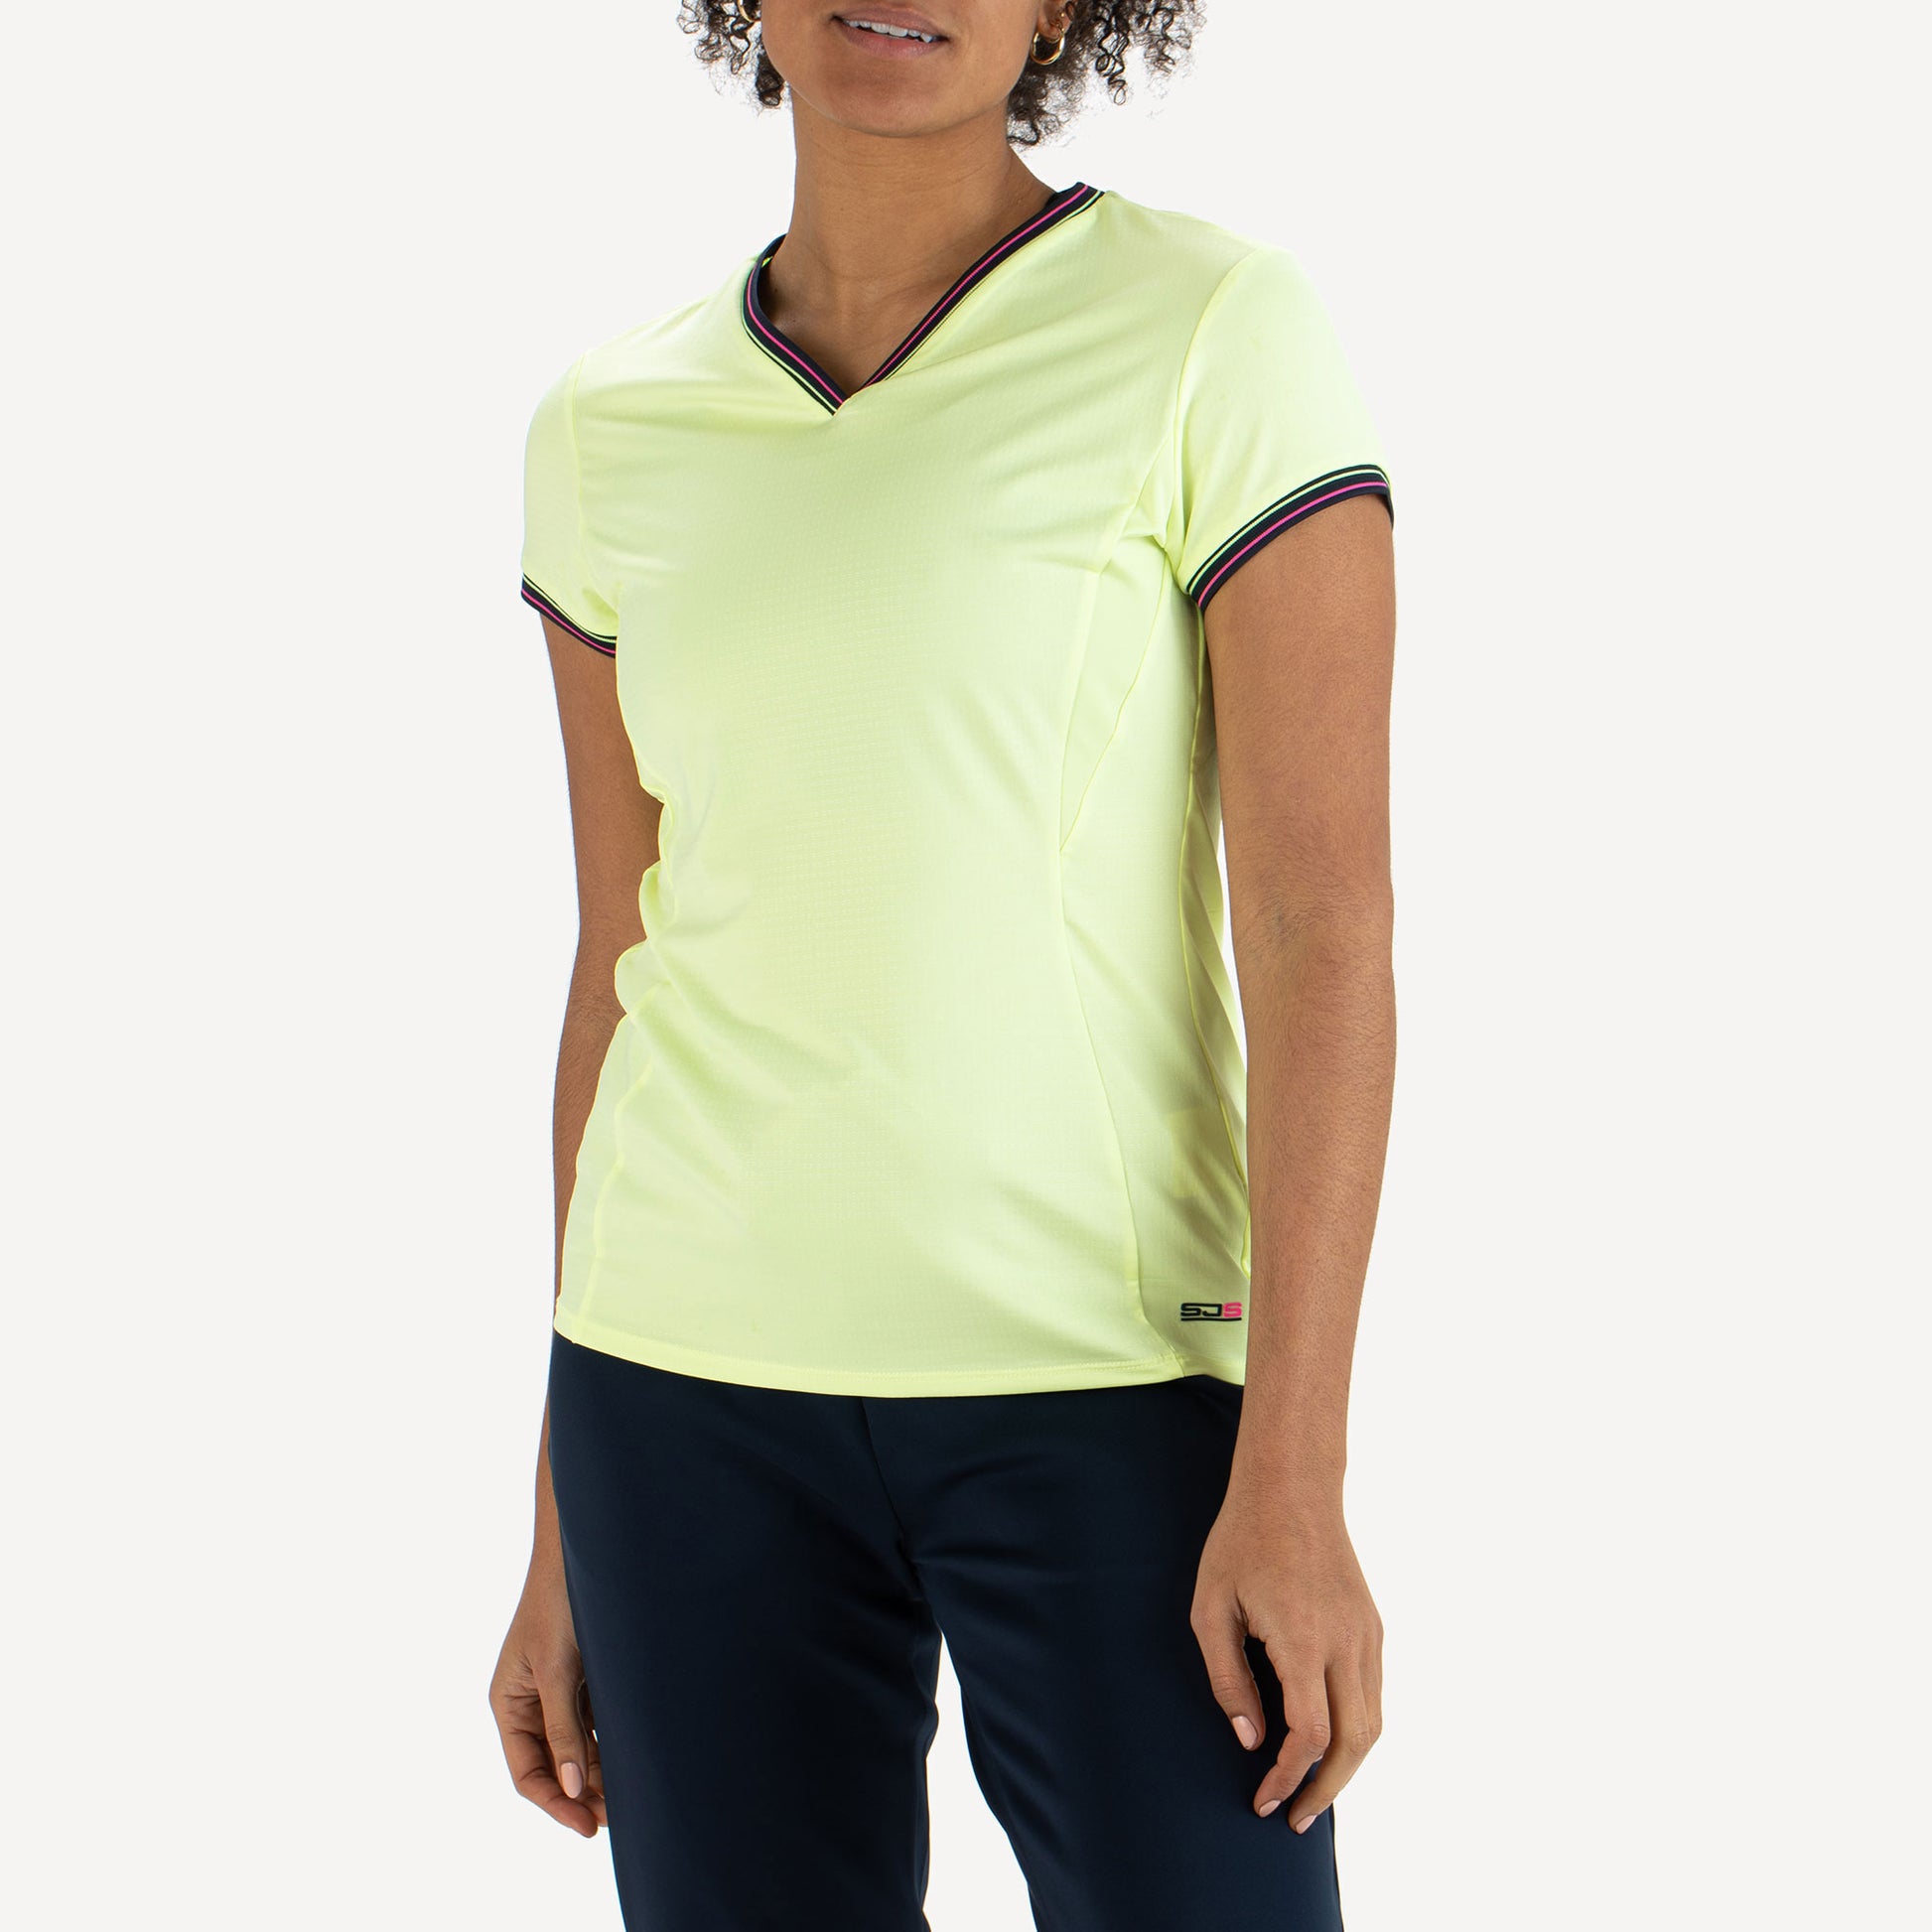 Sjeng Sports Dorothee Women's Tennis Shirt Yellow (1)